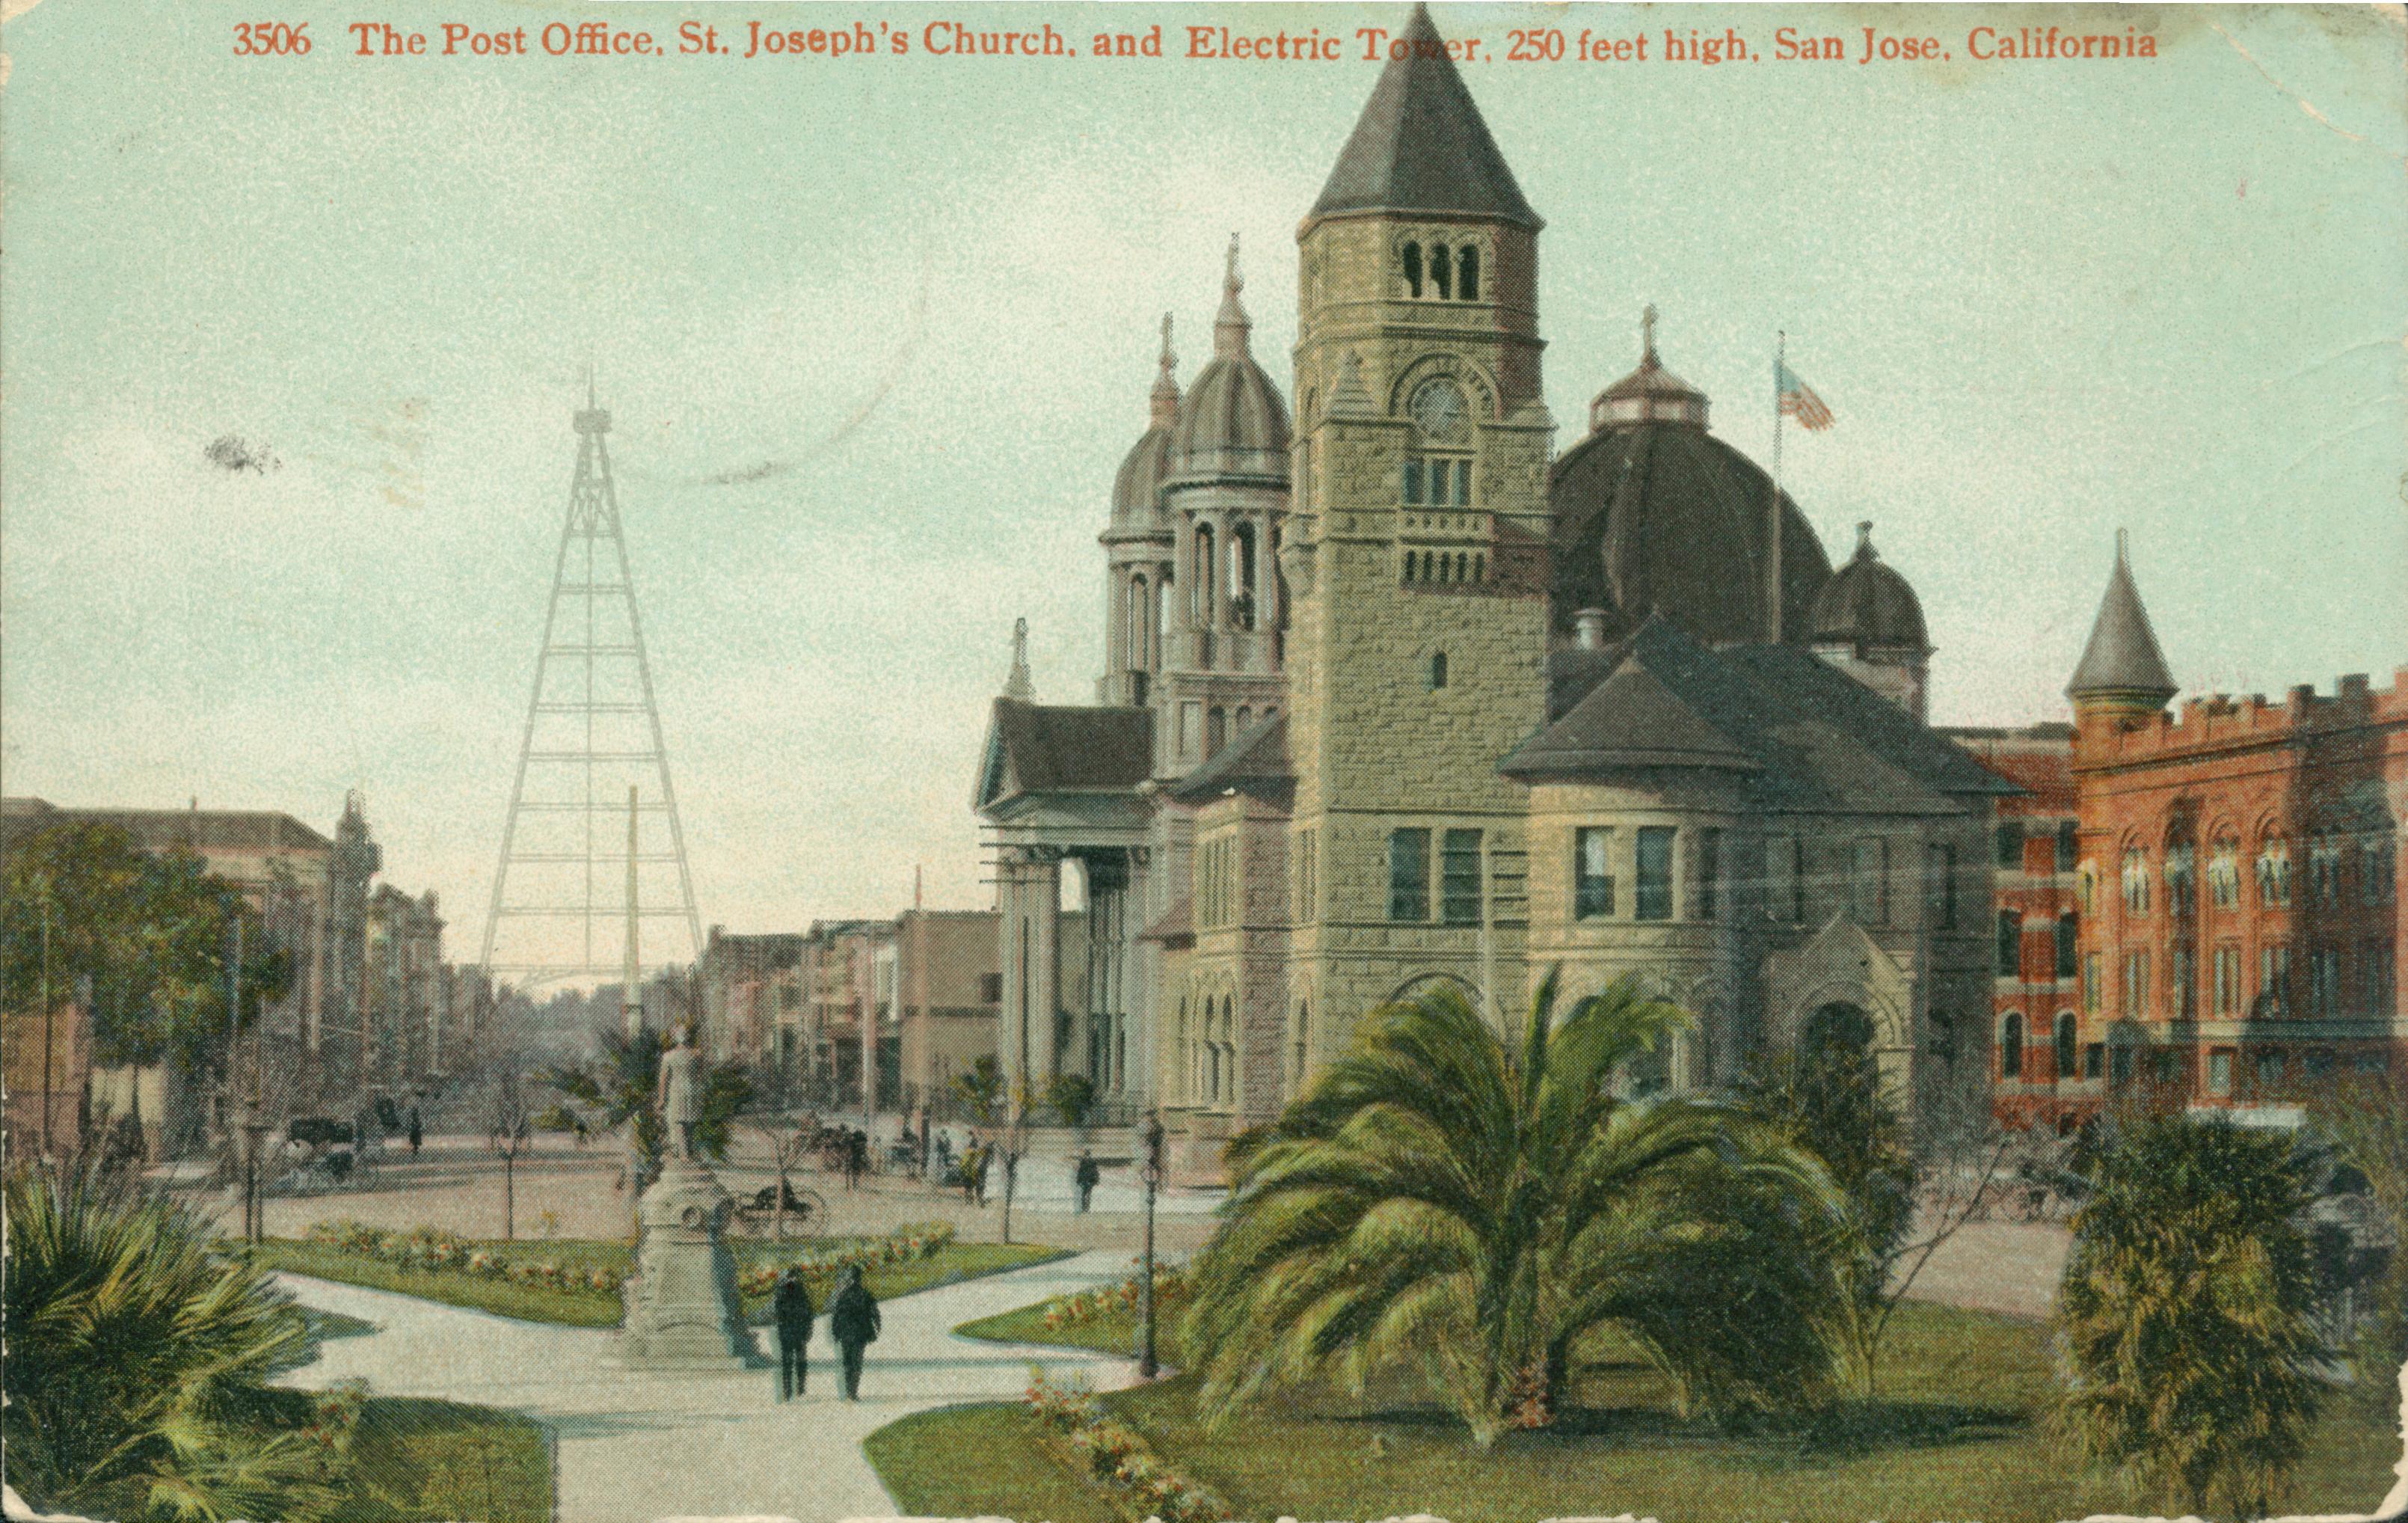 The Post Office, St. Joseph's Church and Electric Tower, 250 feet high, San Jose, California